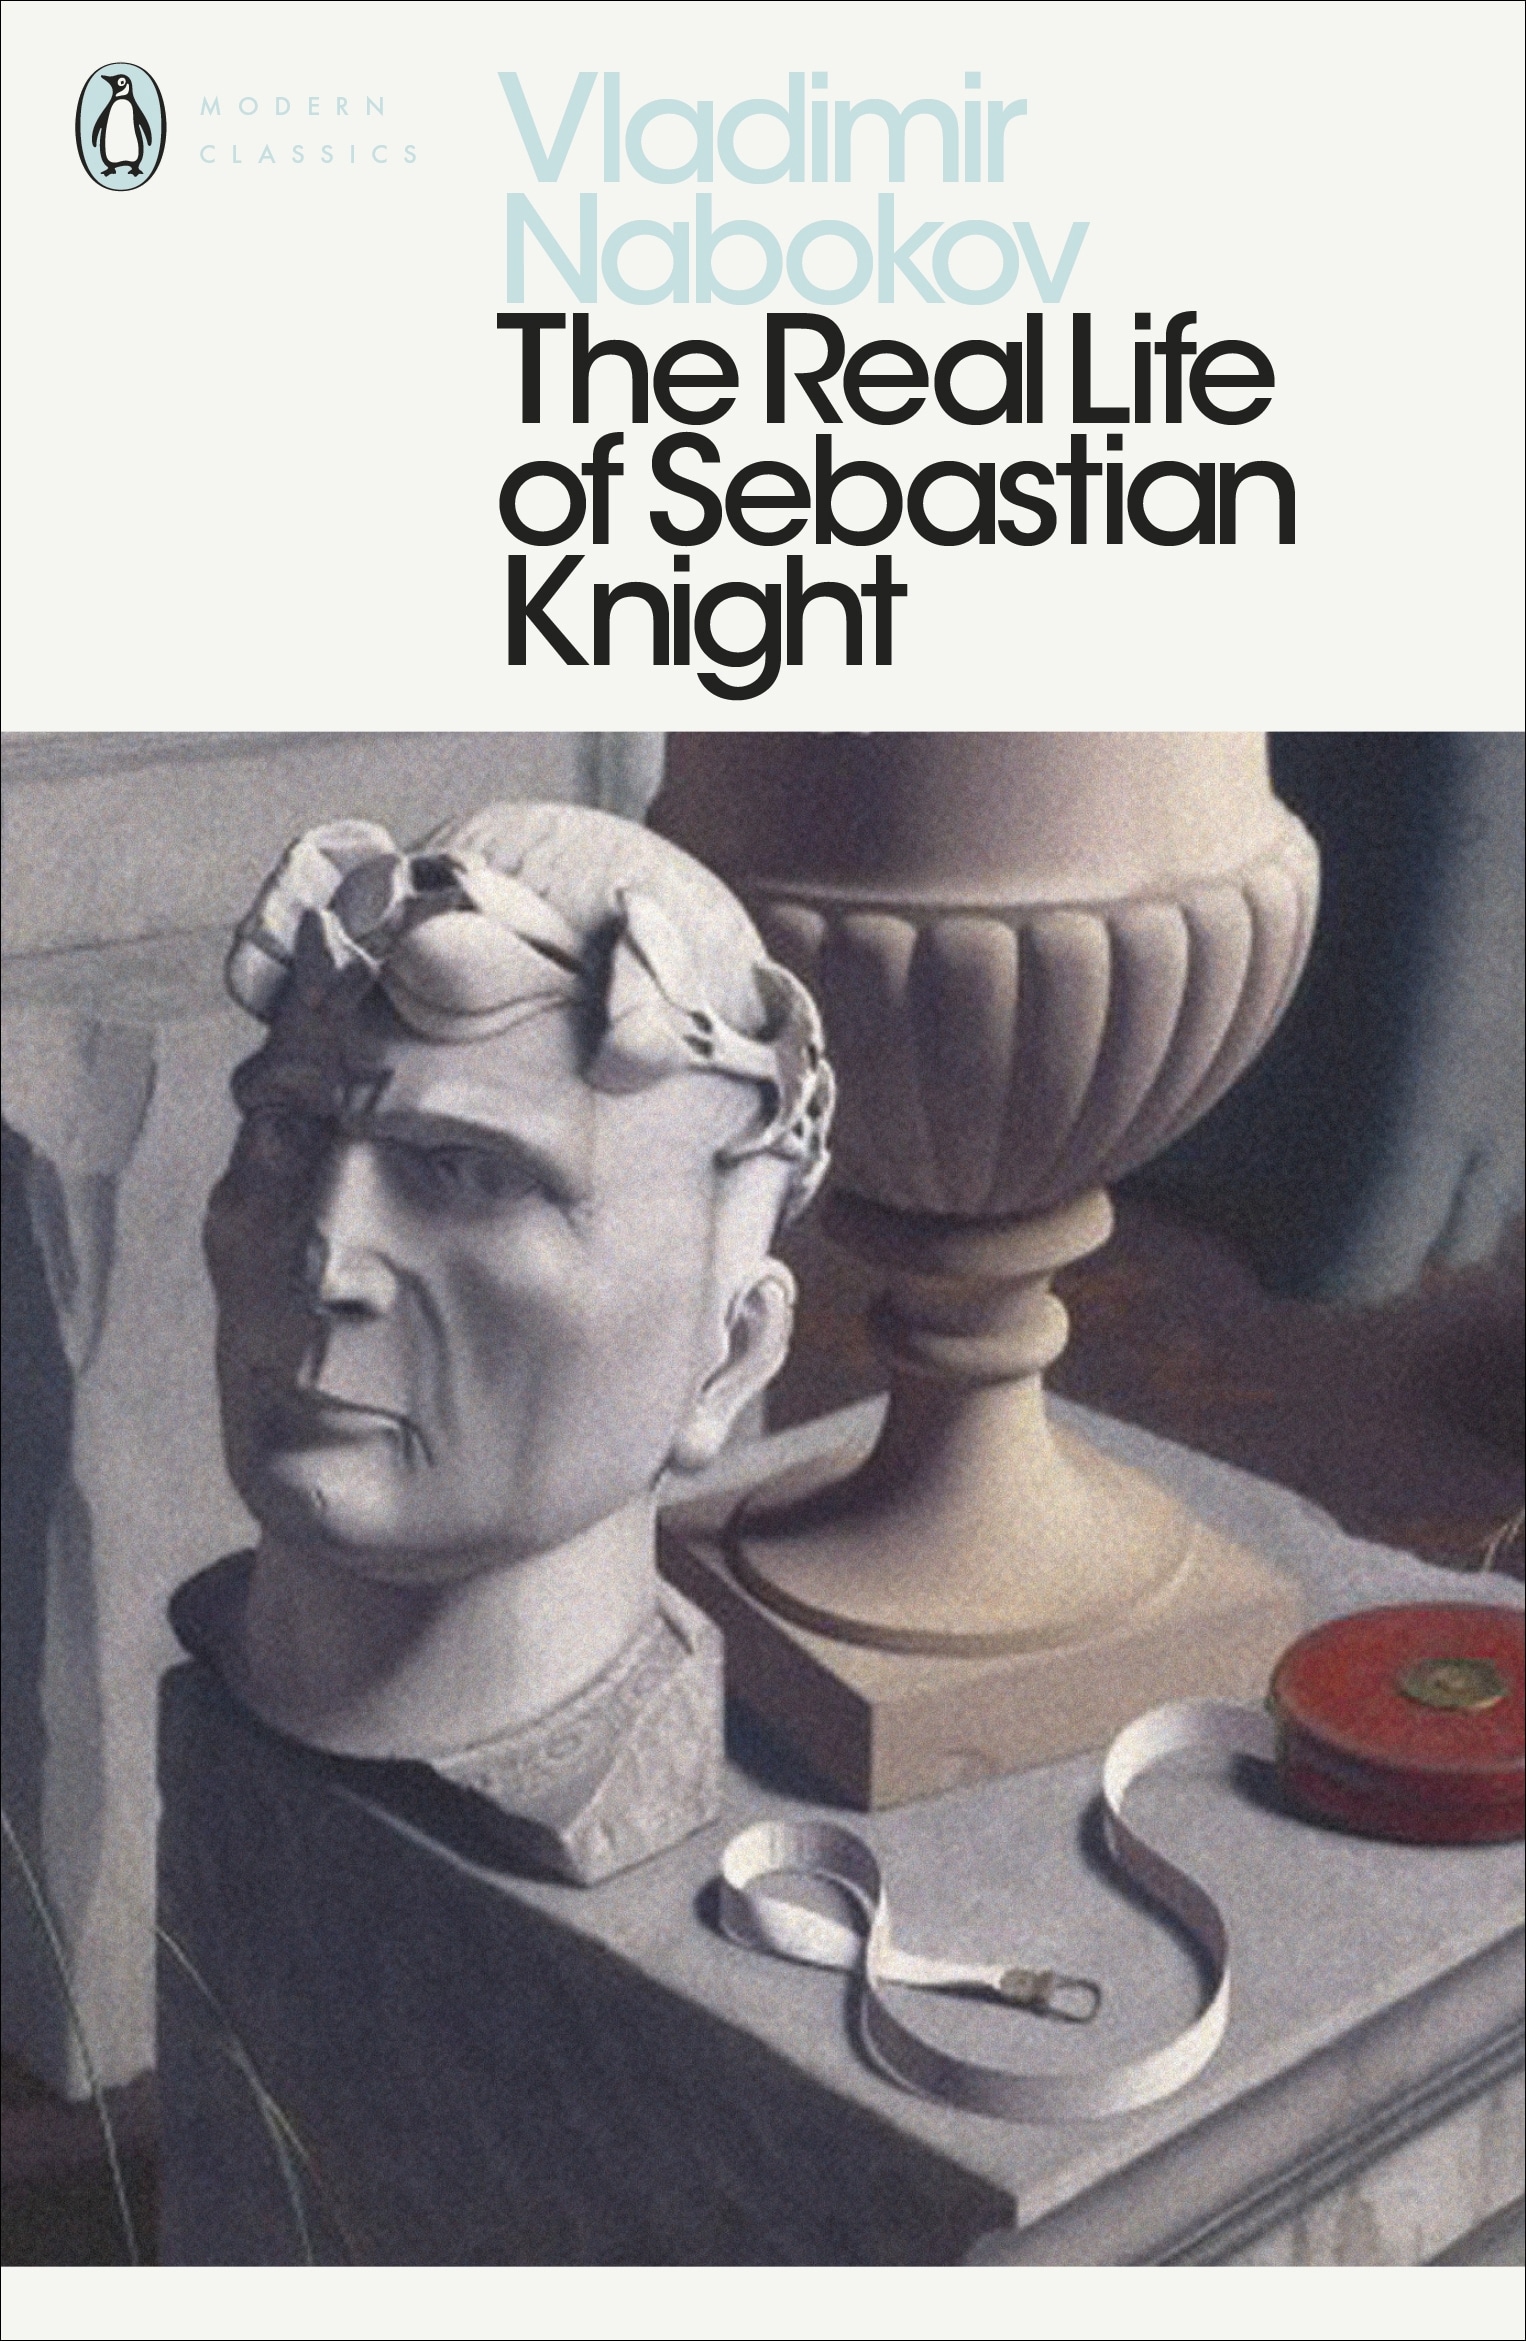 Book “The Real Life of Sebastian Knight” by Vladimir Nabokov, John Lanchester — March 29, 2001